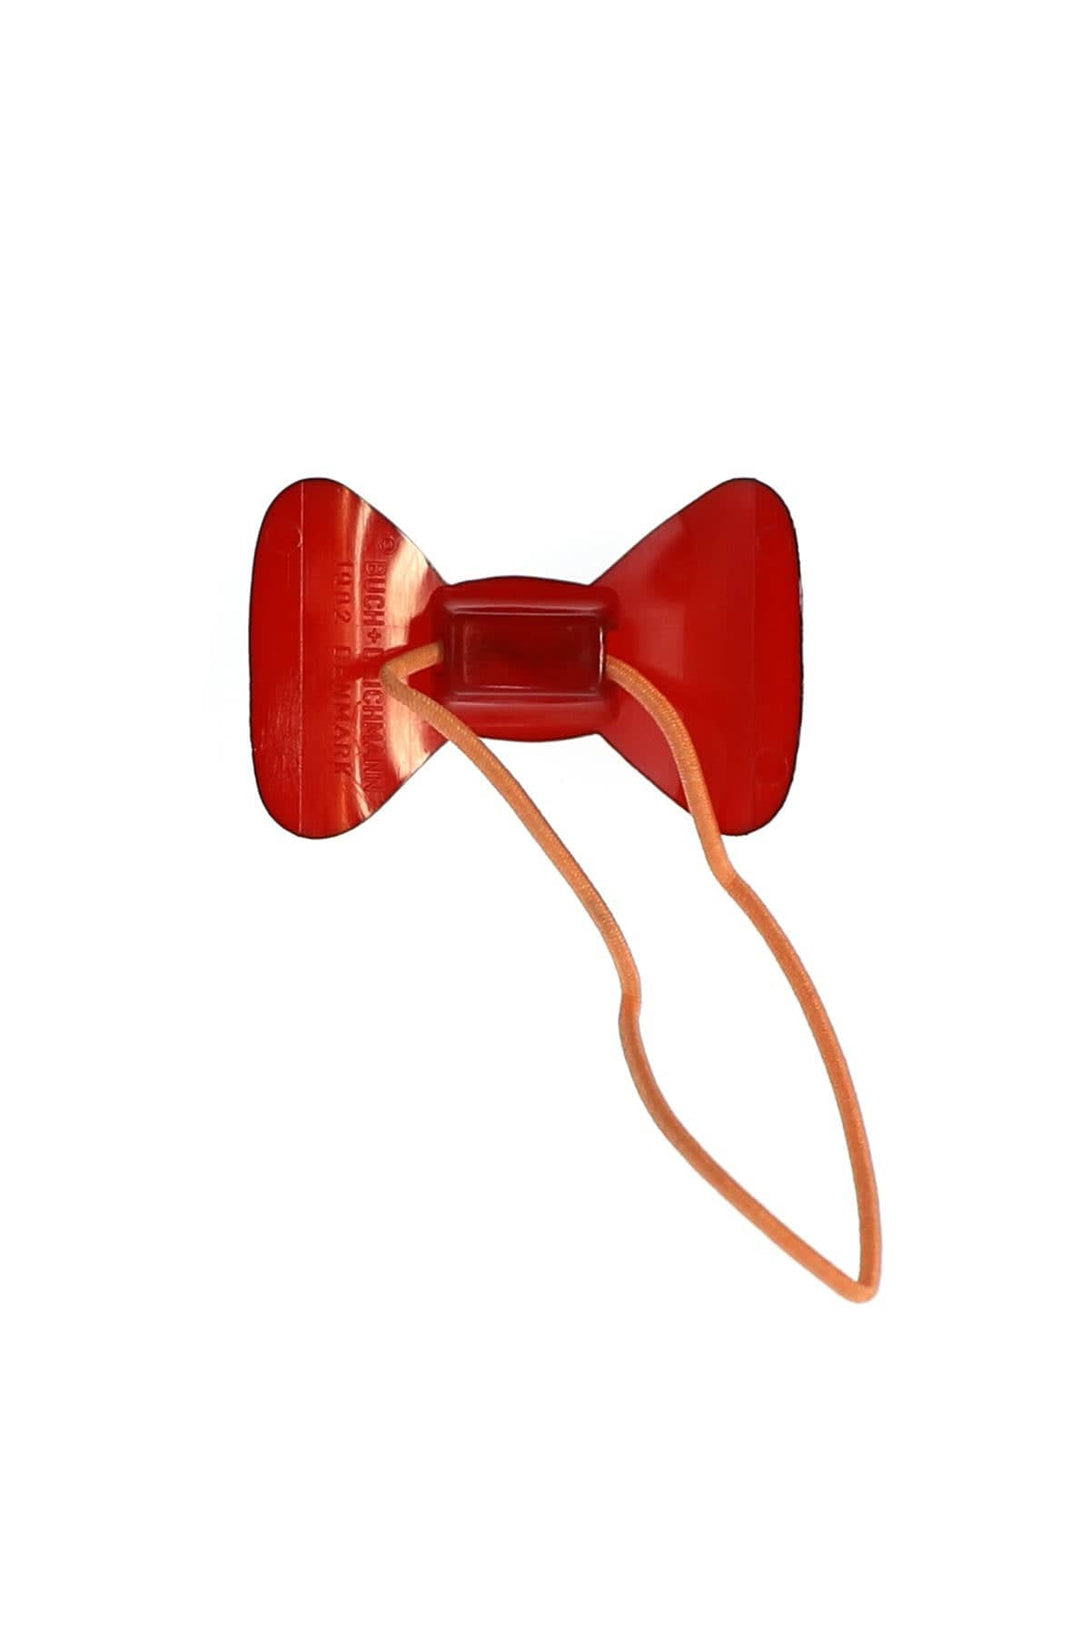 Retro Buch and Deichmann Candy Apple Red Bow Hair Tie